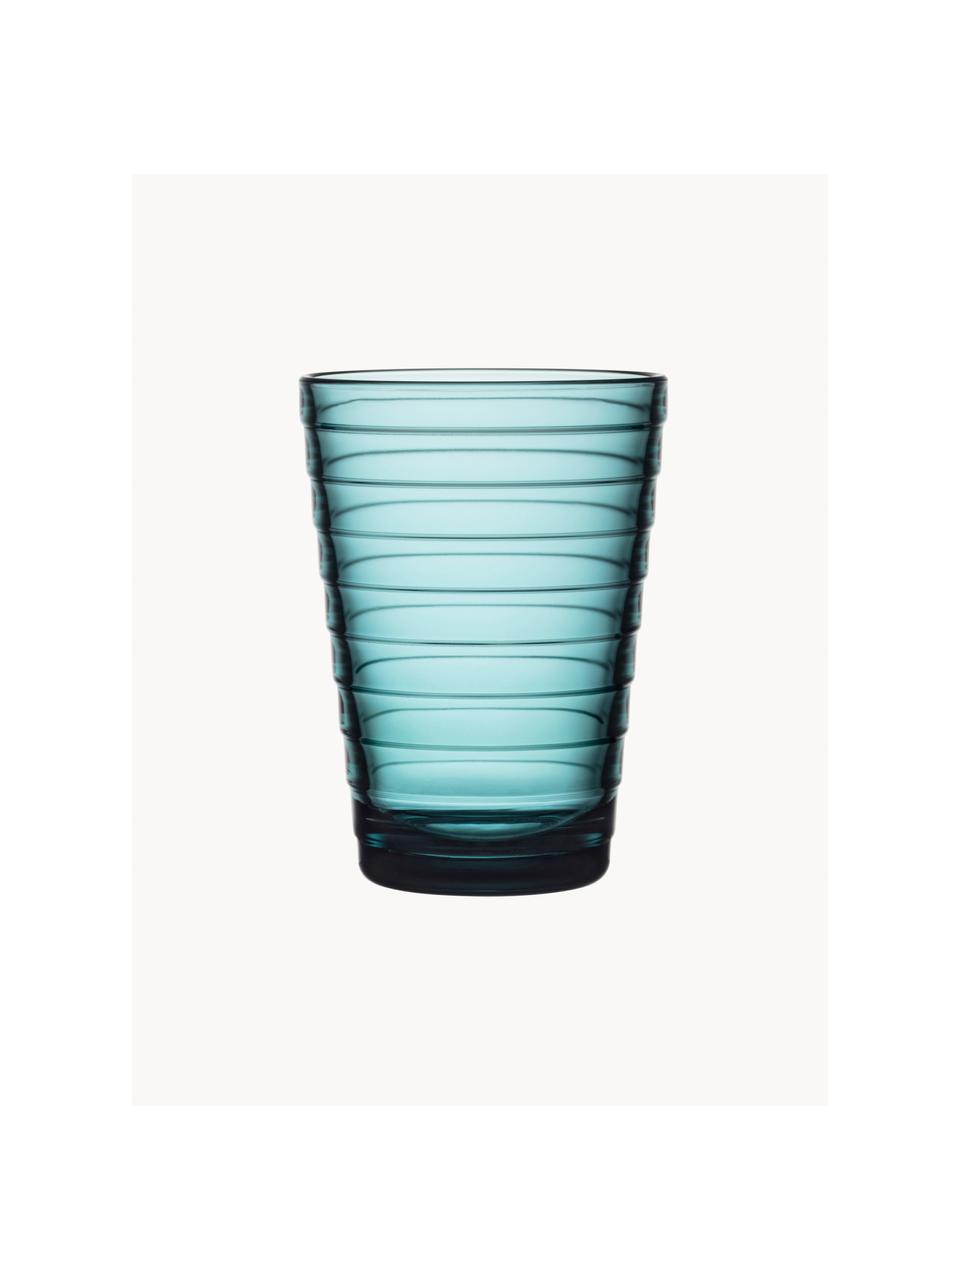 Wassergläser Aino Aalto, 2 Stück, Glas, Türkis, transparent, Ø 7 x H 9 cm, 220 ml